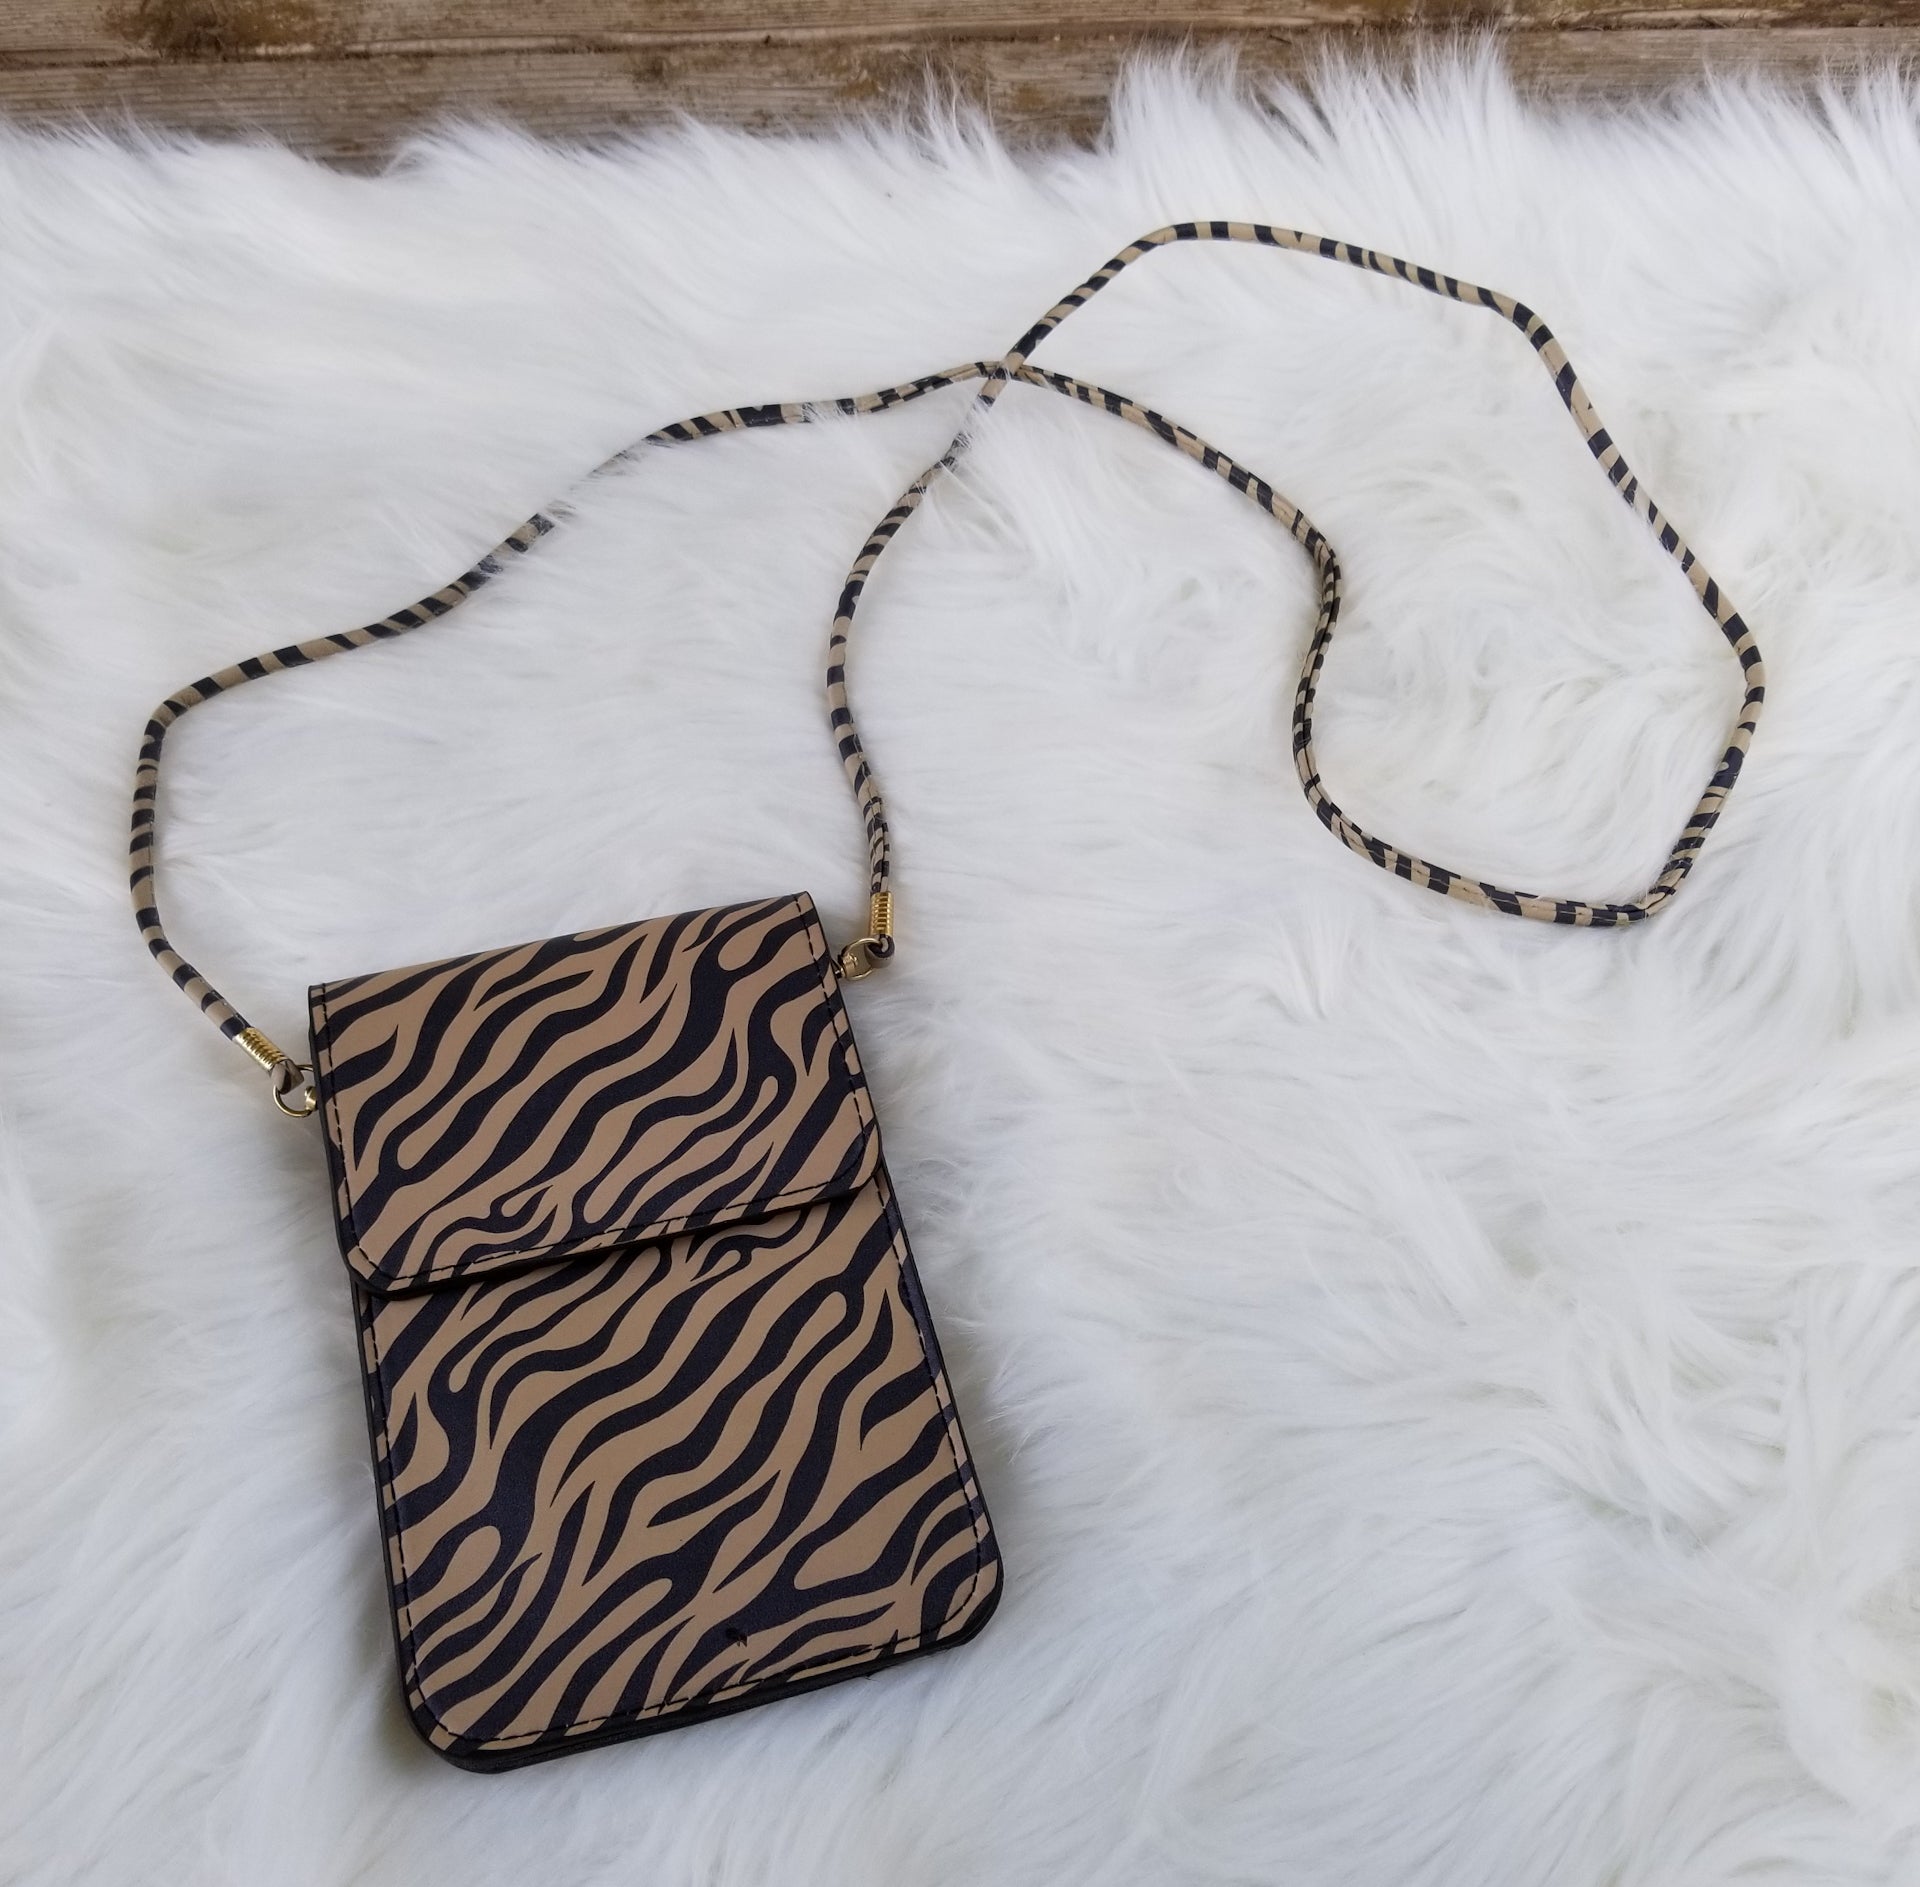 Genuine Leather Zebra Print Foldover Clutch Bag Crossbody Shoulder Handbag  Zebra Print Purse Versatile Elegant Animal Print Clutch Bag - Etsy